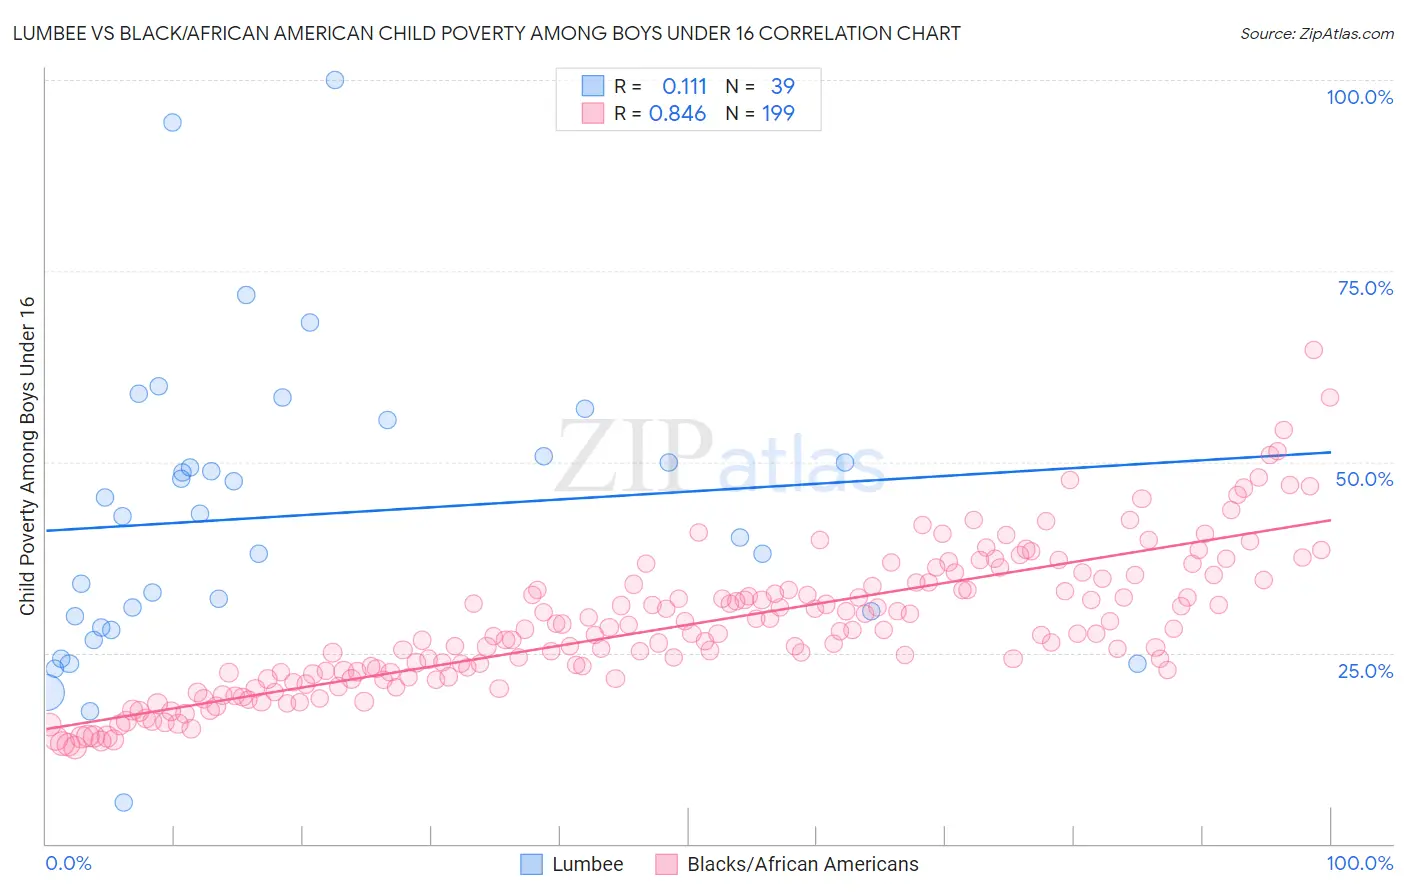 Lumbee vs Black/African American Child Poverty Among Boys Under 16